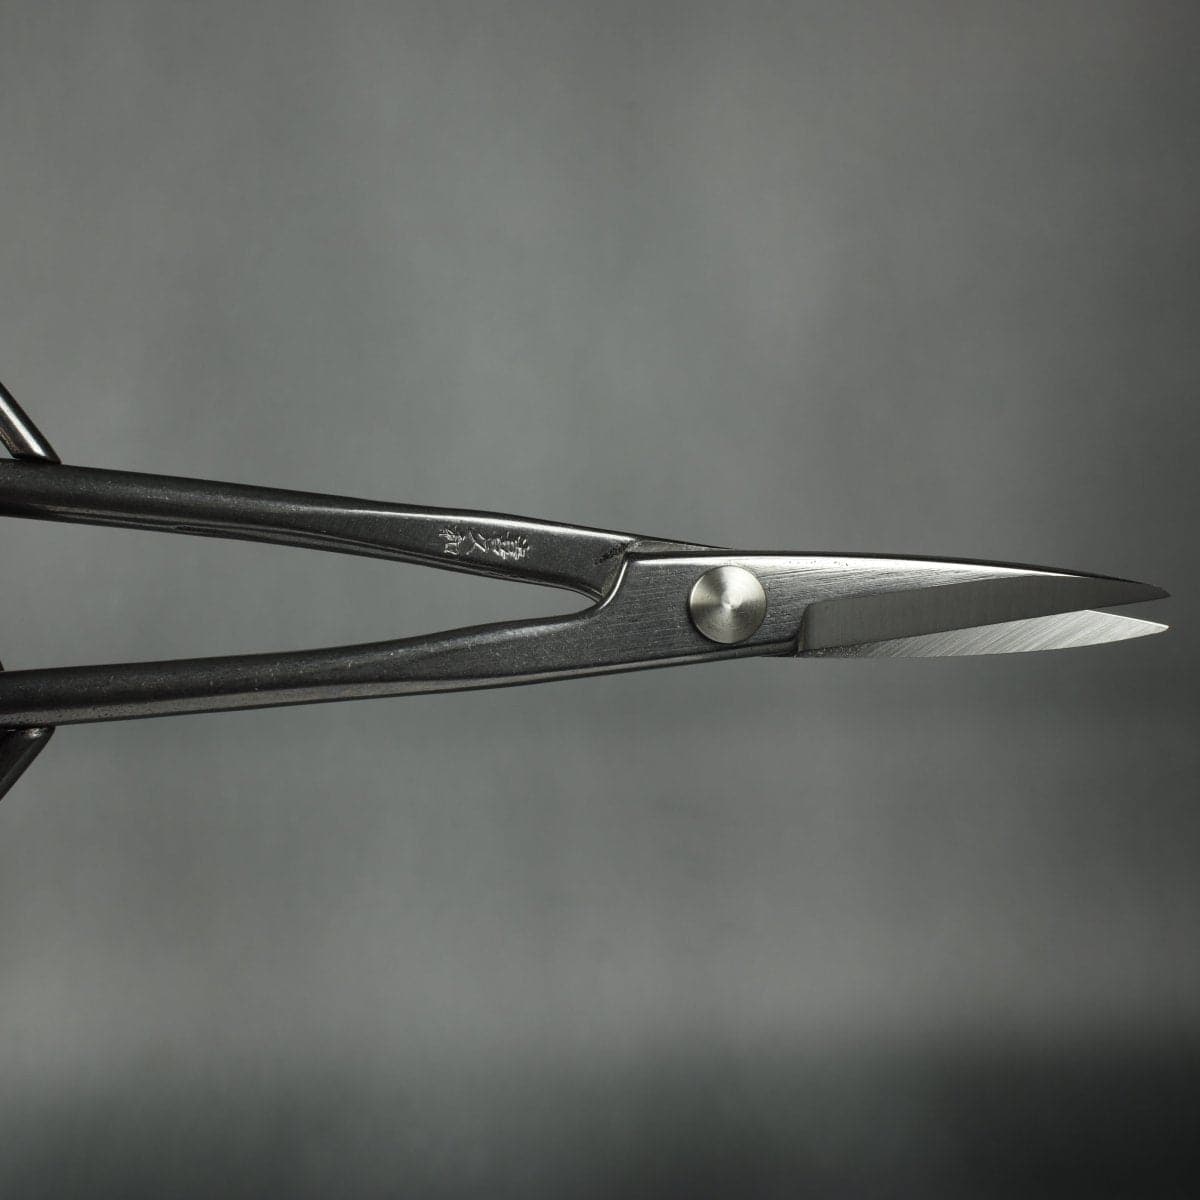 180mm Stainless Steel Bud Bonsai Scissors open blades